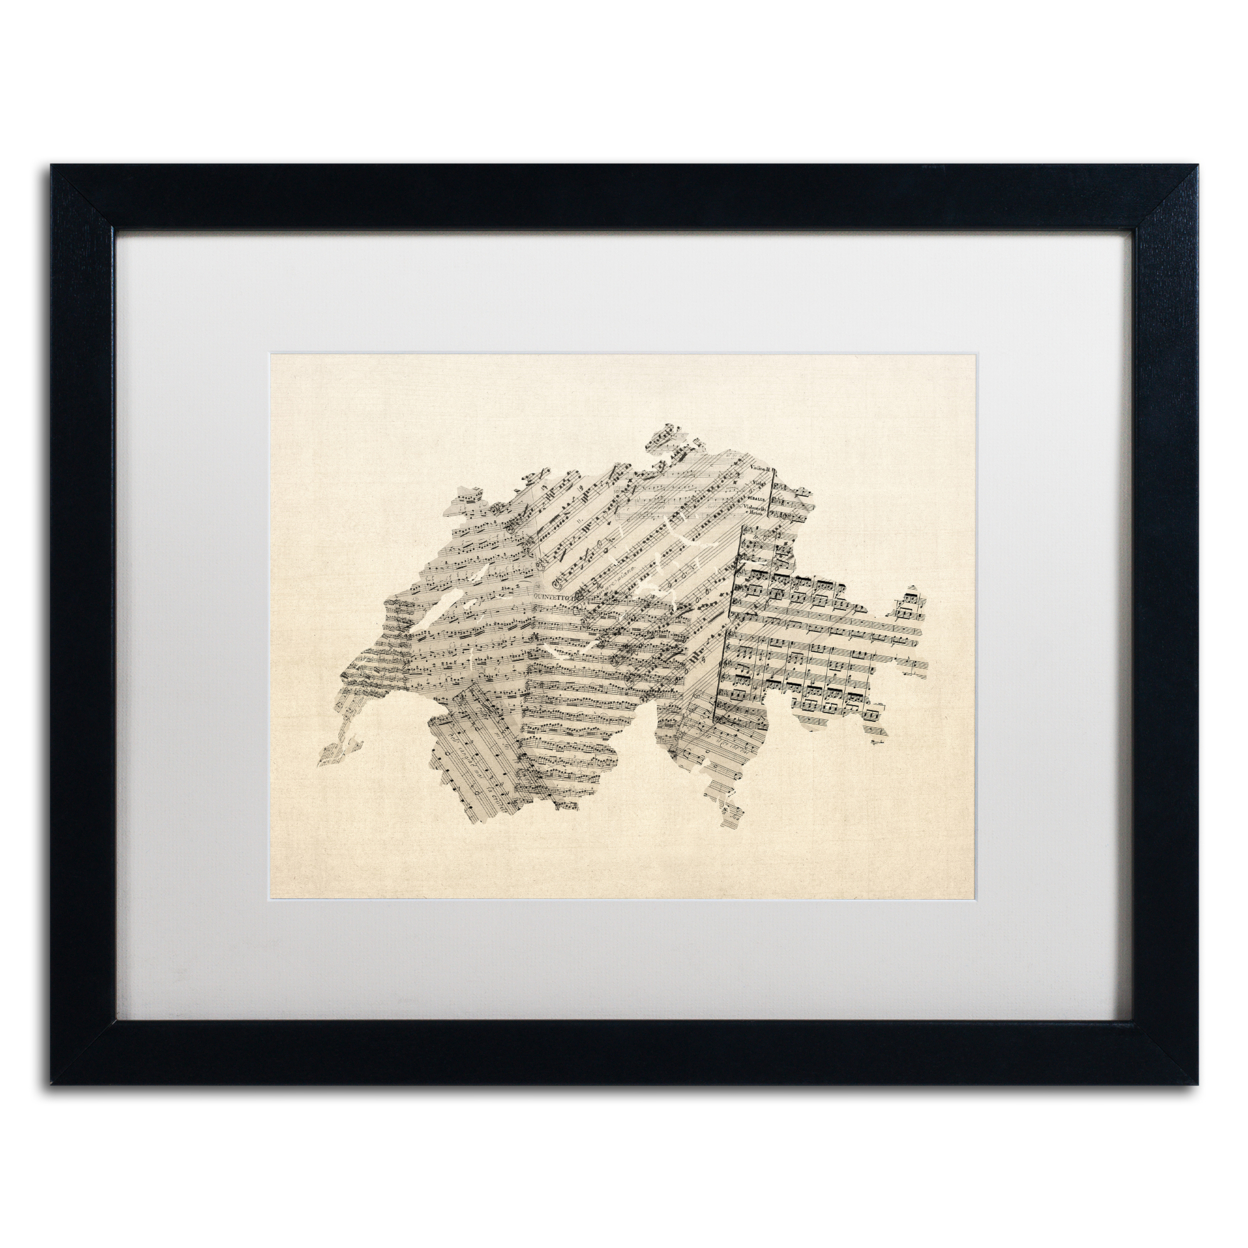 Michael Tompsett 'Sheet Music Map Of Switzerland' Black Wooden Framed Art 18 X 22 Inches